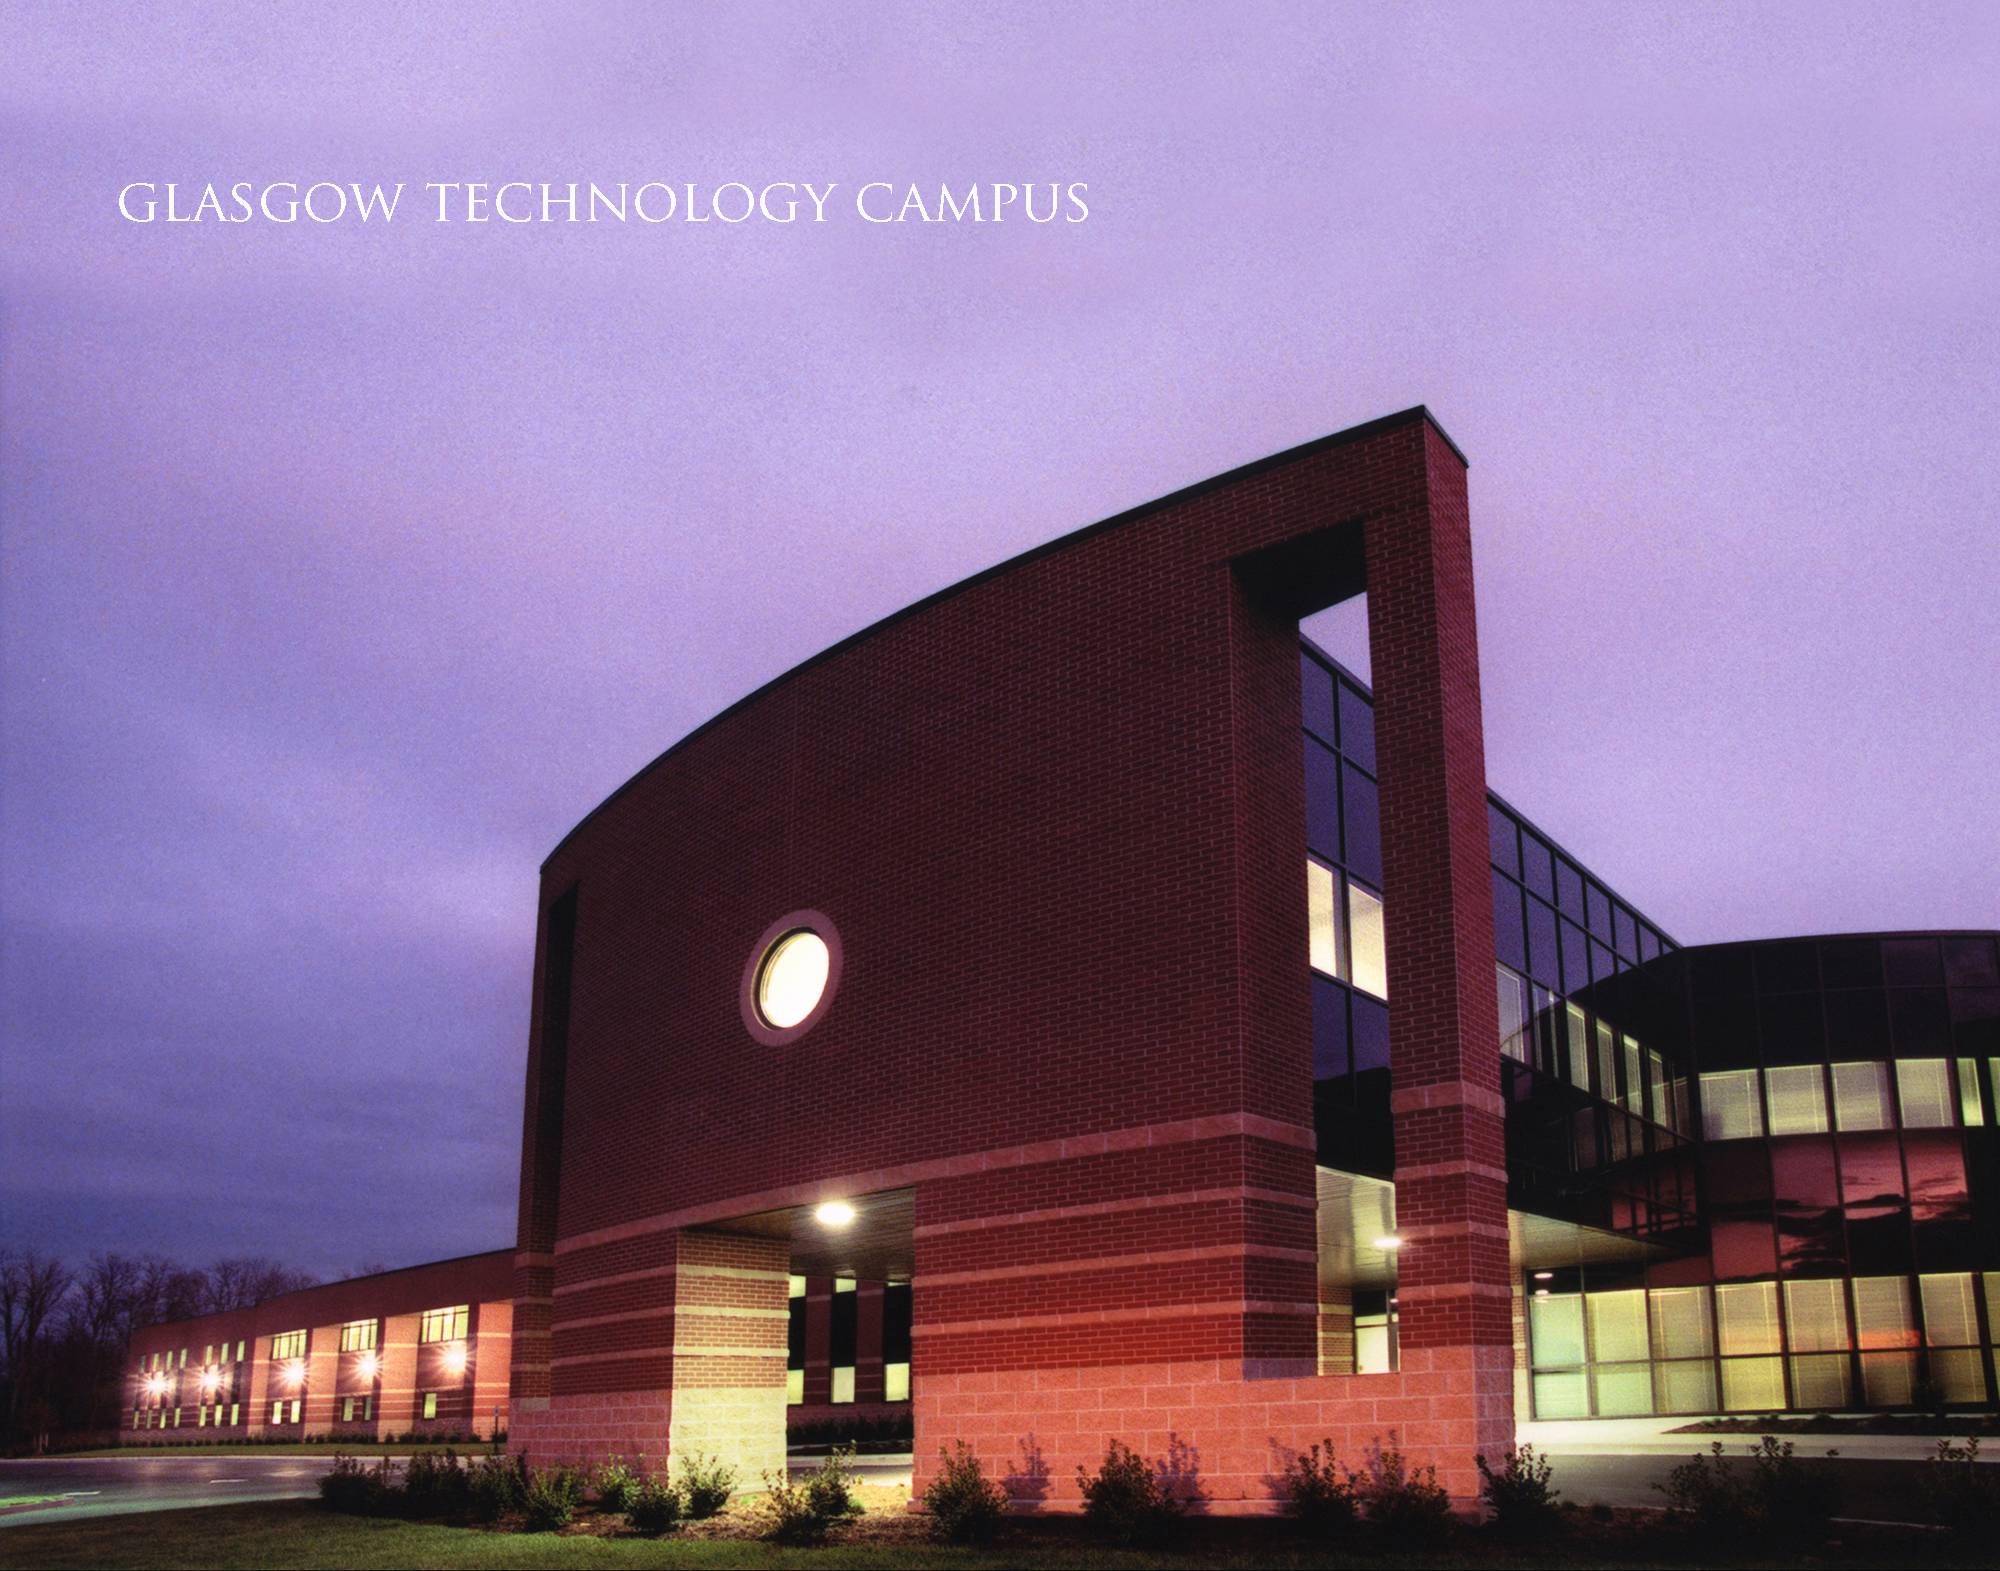 Glasgow Technology Campus